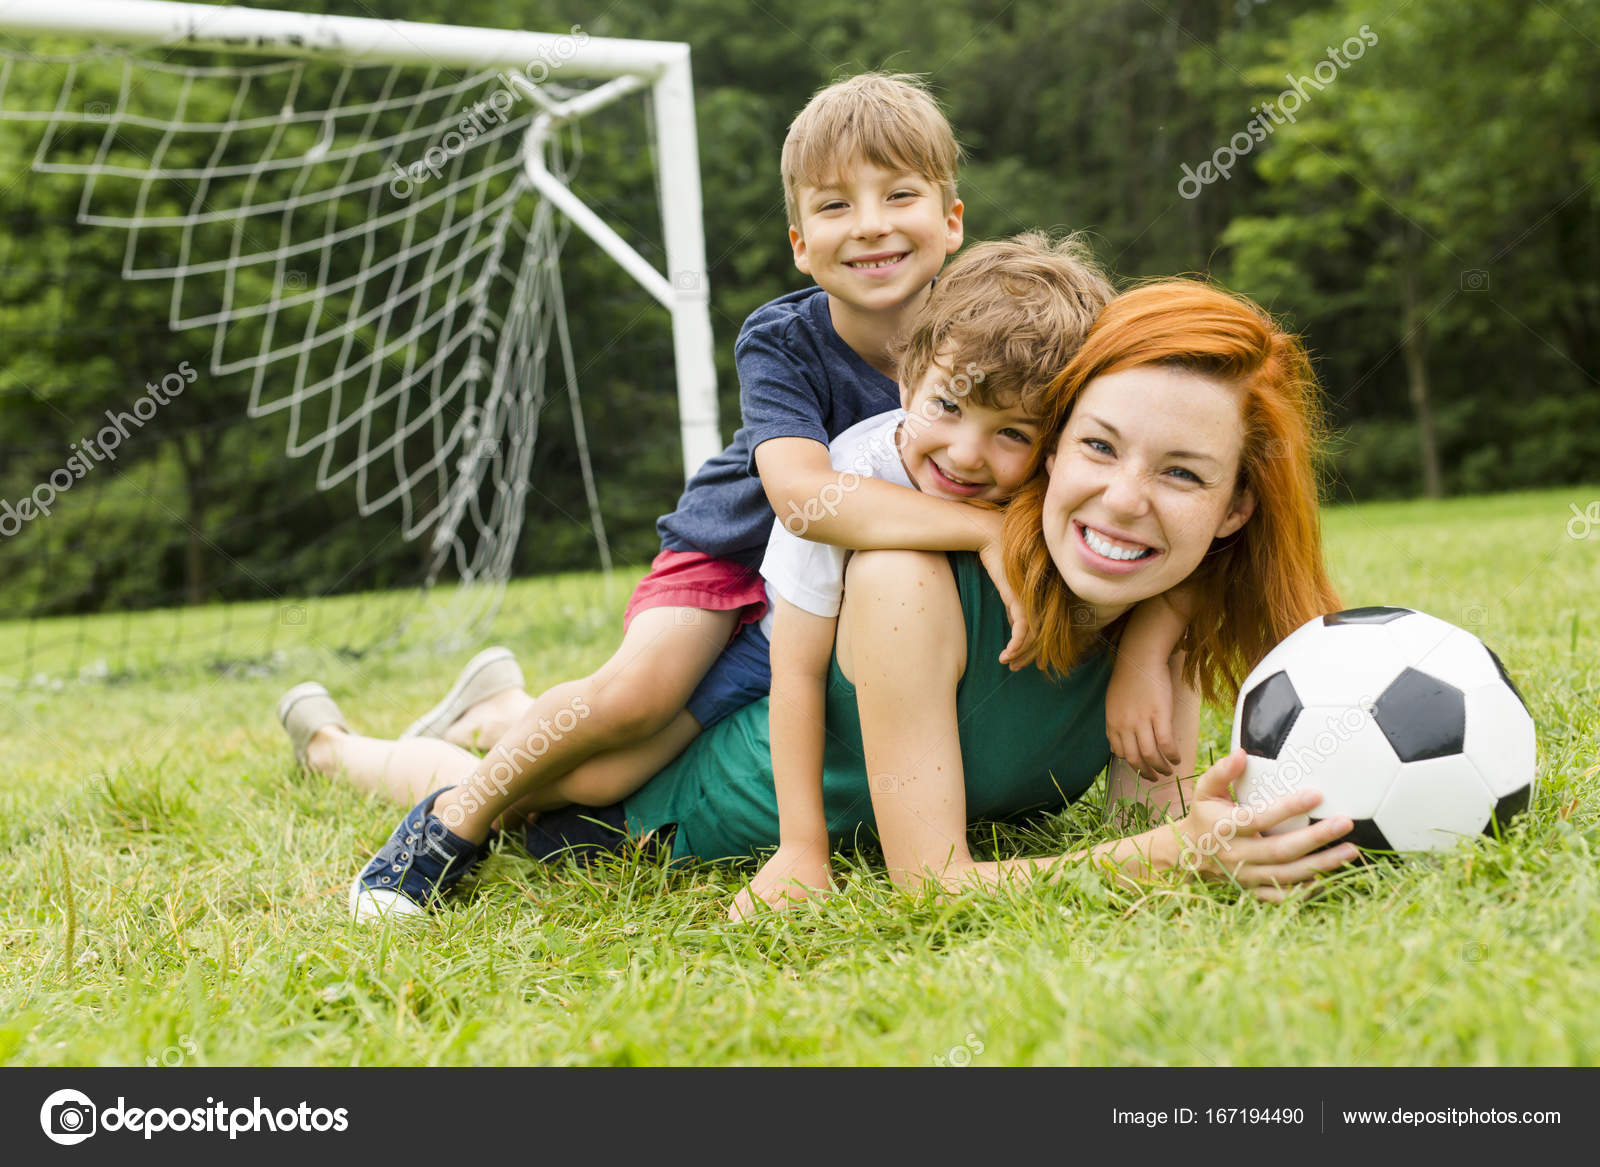 Soccer Moms Pics